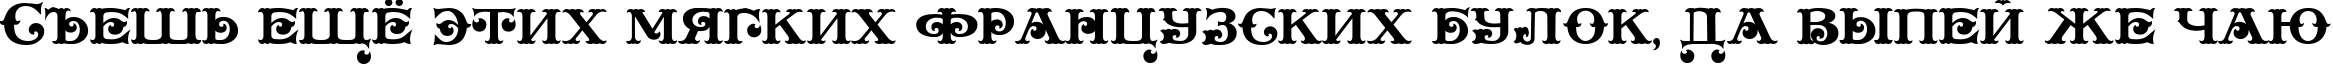 Пример написания шрифтом Plymouth текста на русском